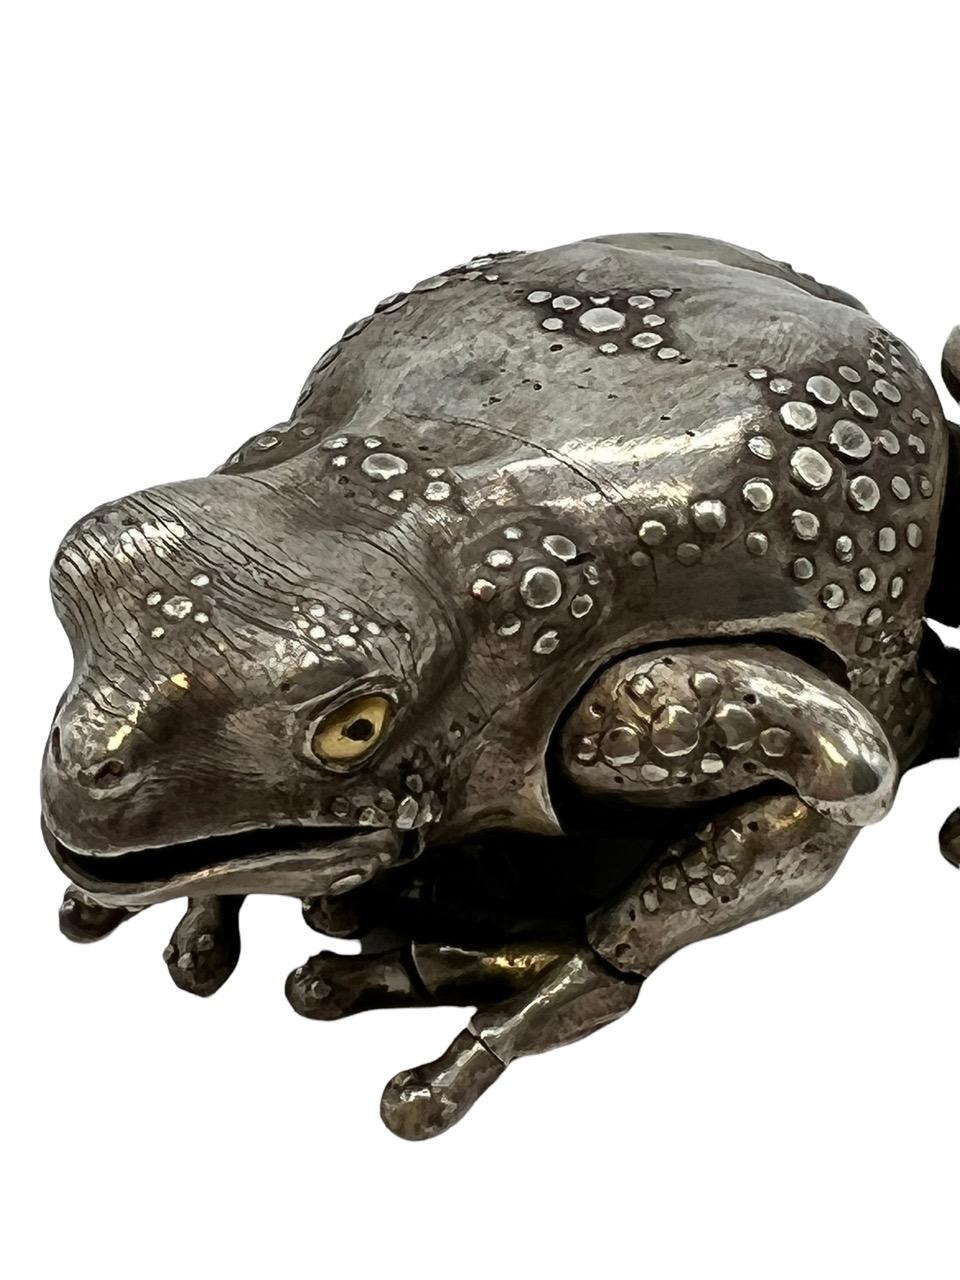 Oleg Konstantinov Fully Articulated Frog Made of Sterling Silver For Sale 8